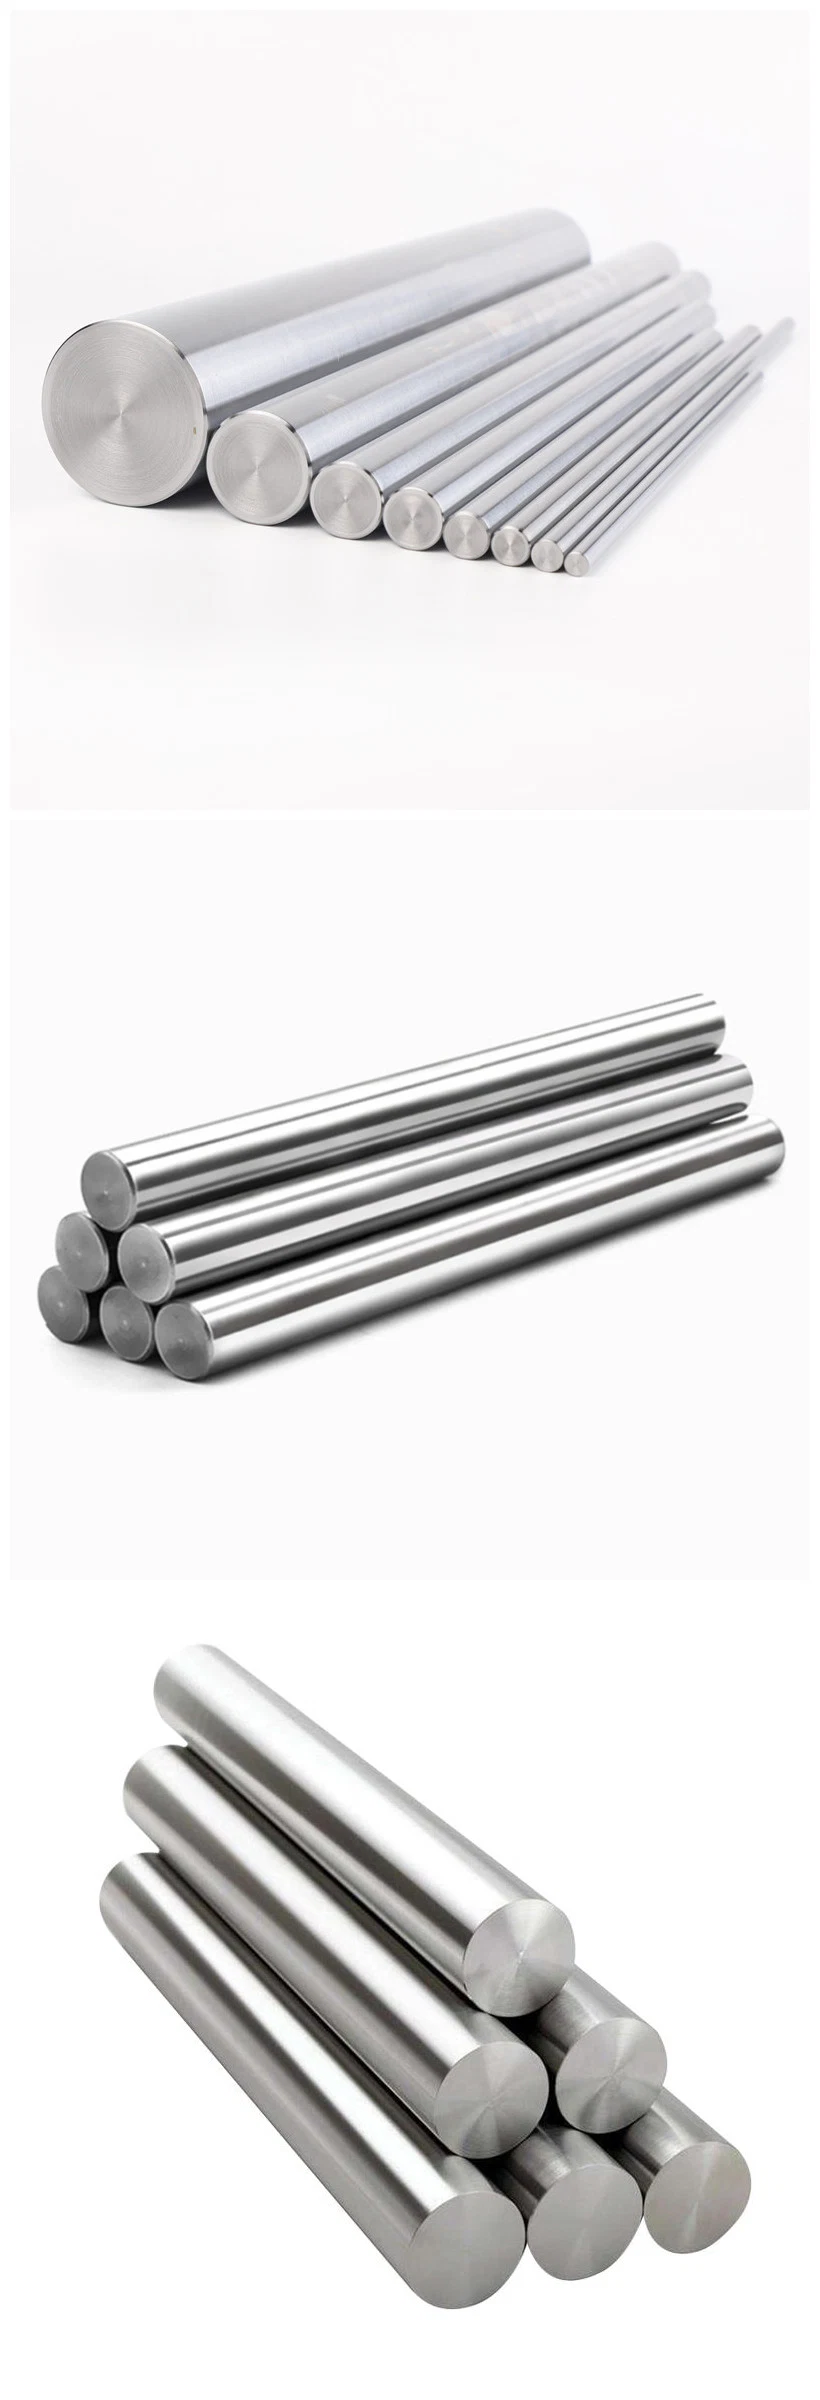 Round Bar Steel Chrome Plated Bar, Piston Rod Hard Chrome Plated Cylinder Piston Rod Steel Round Bar Manufacturer